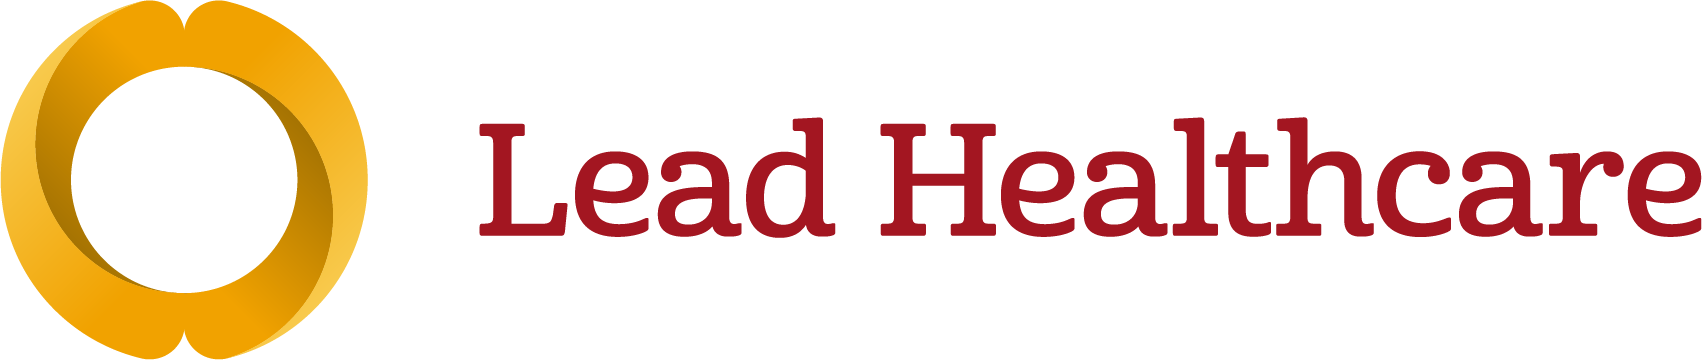 LeadHealthcare_logo_left_rgb